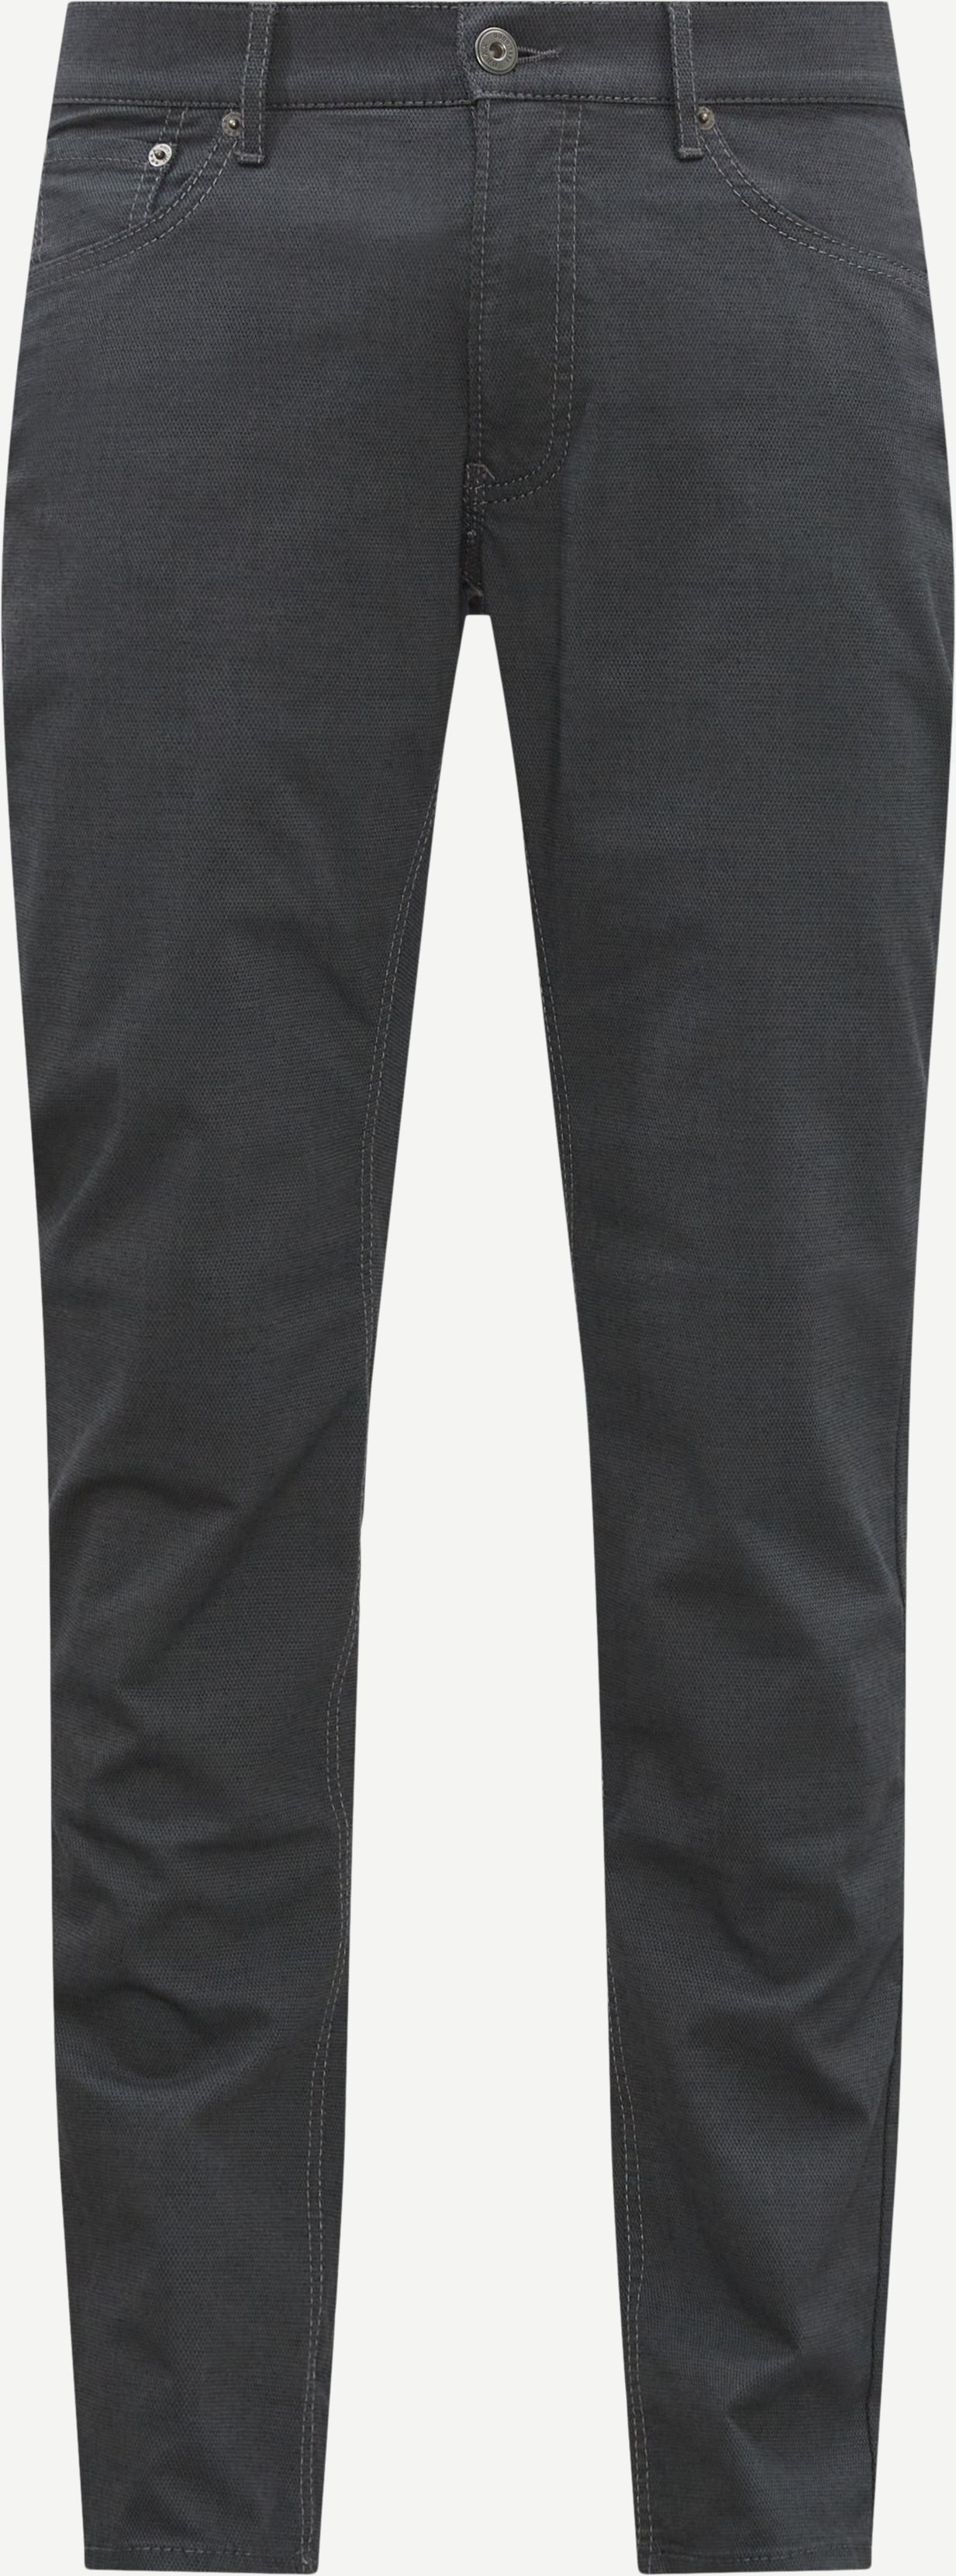 Brax Jeans 81-3707 CHUCK Grey